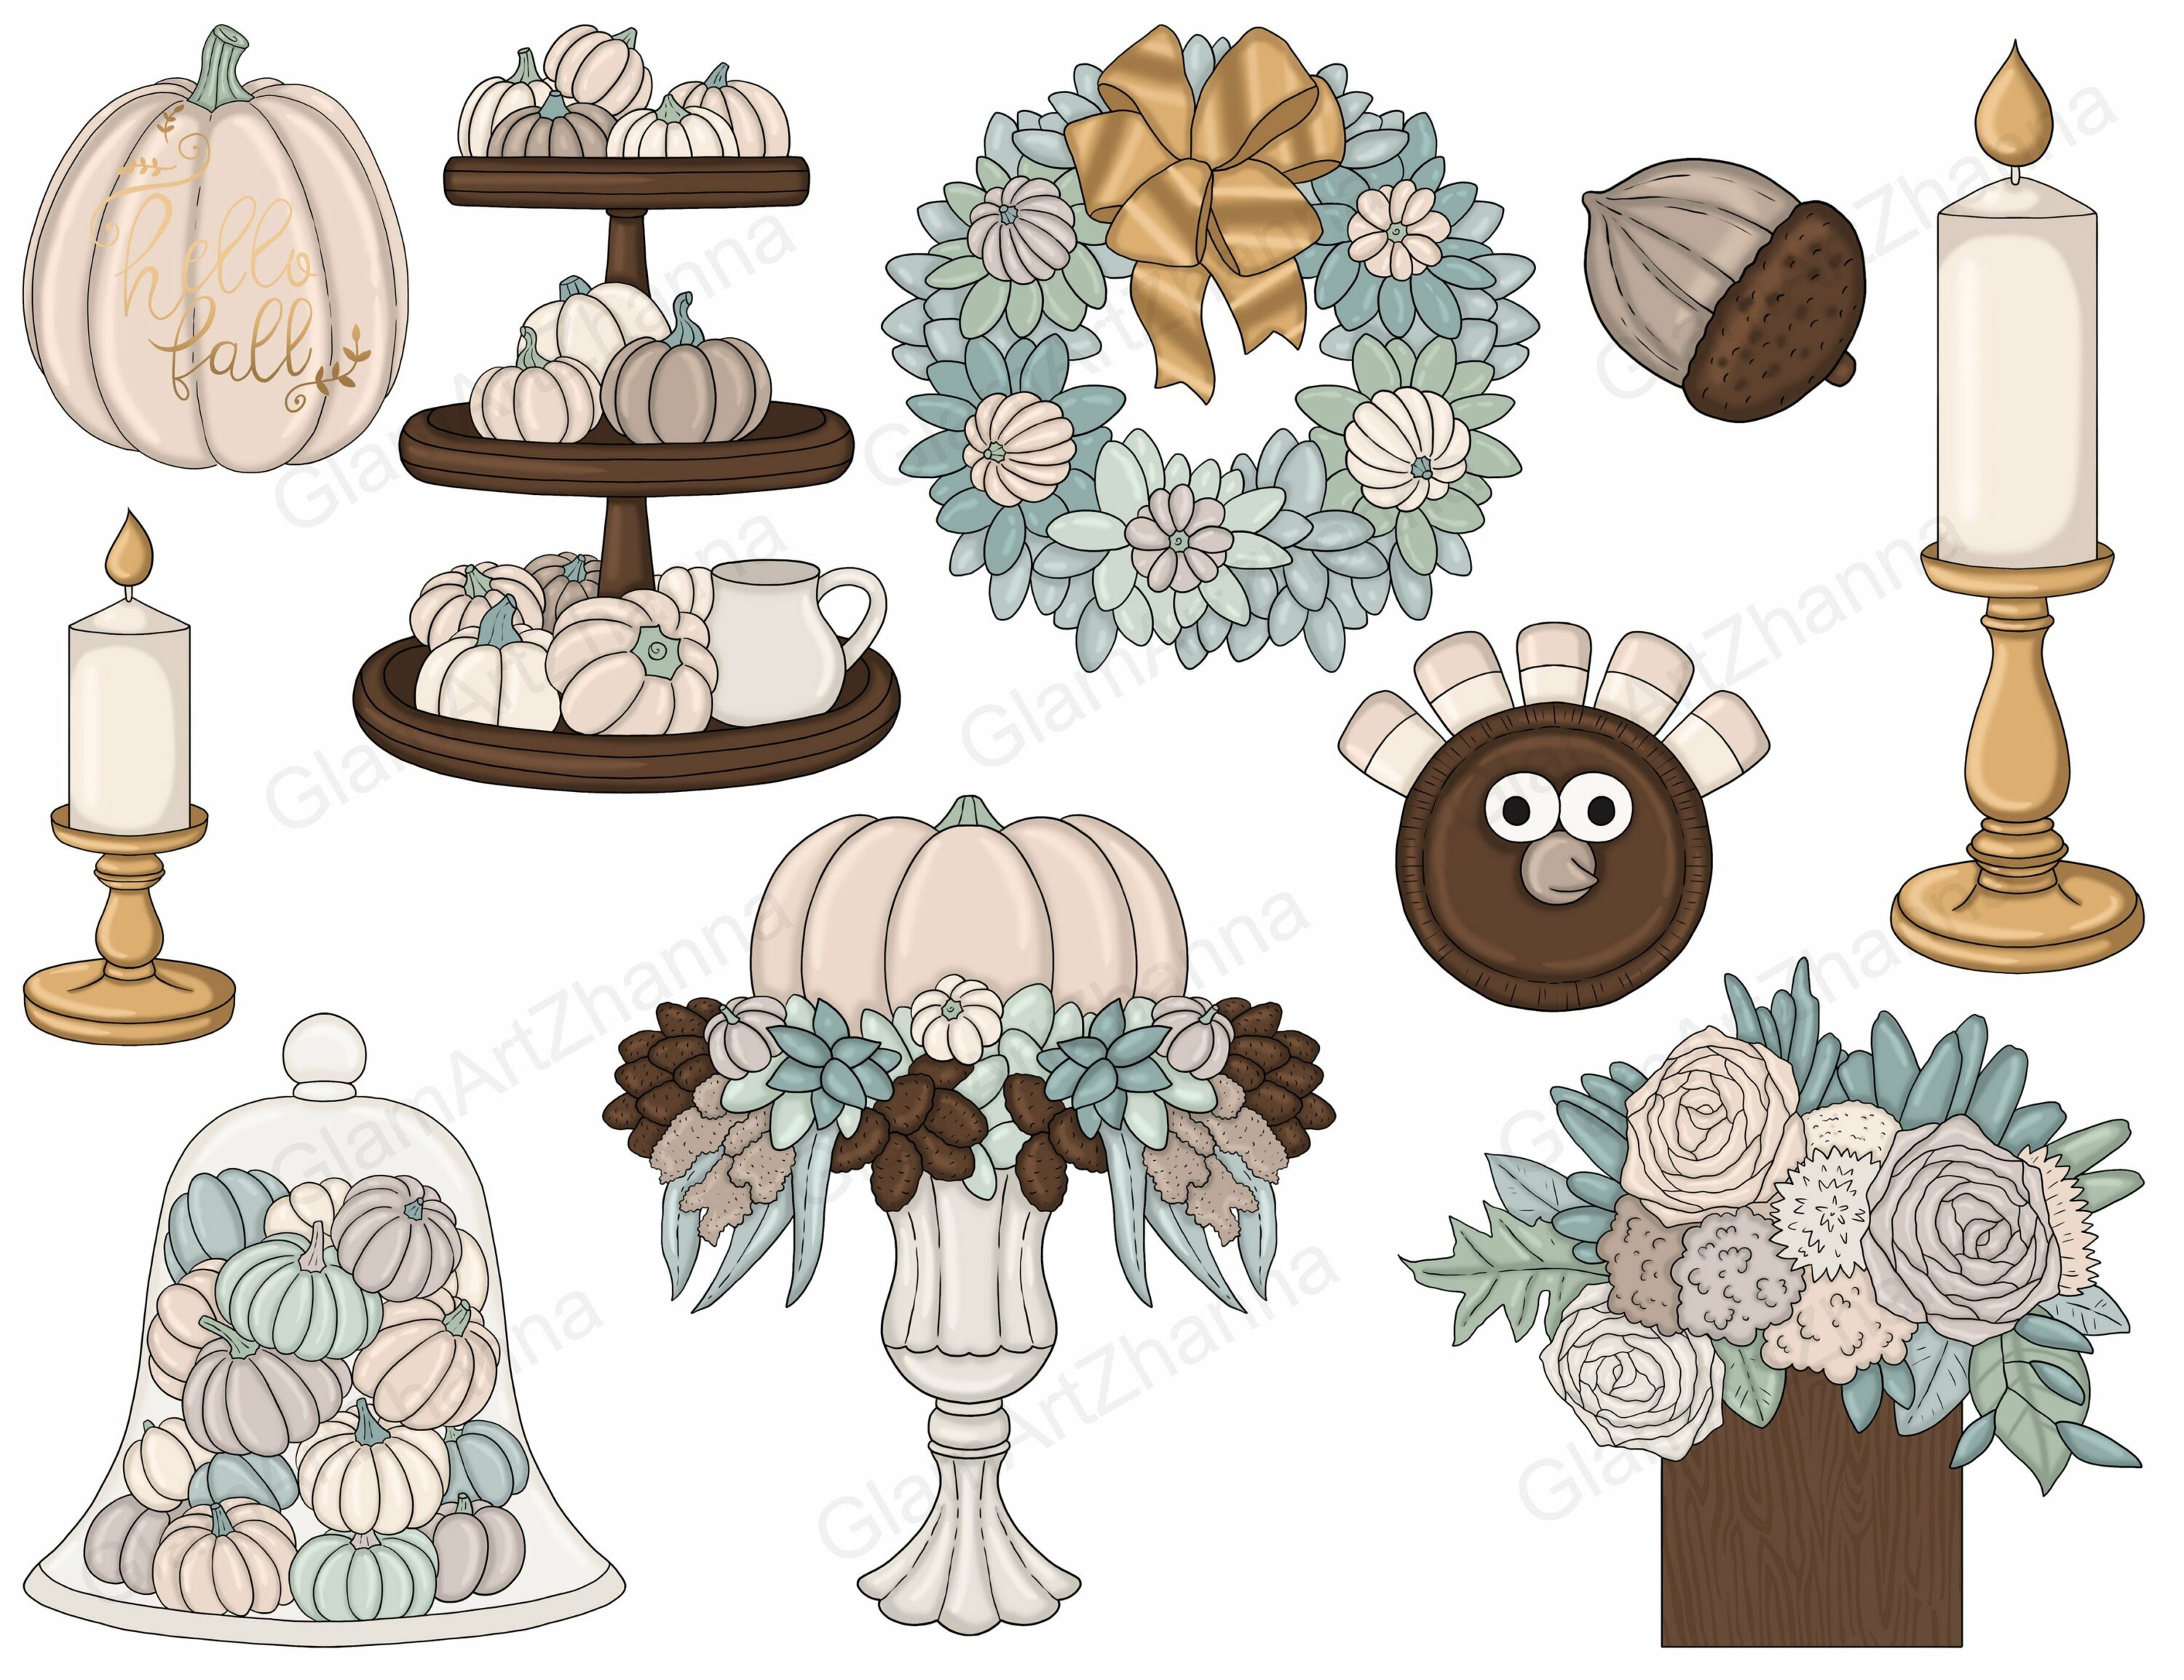 Delicate elements for royal Thanksgiving ilustration.